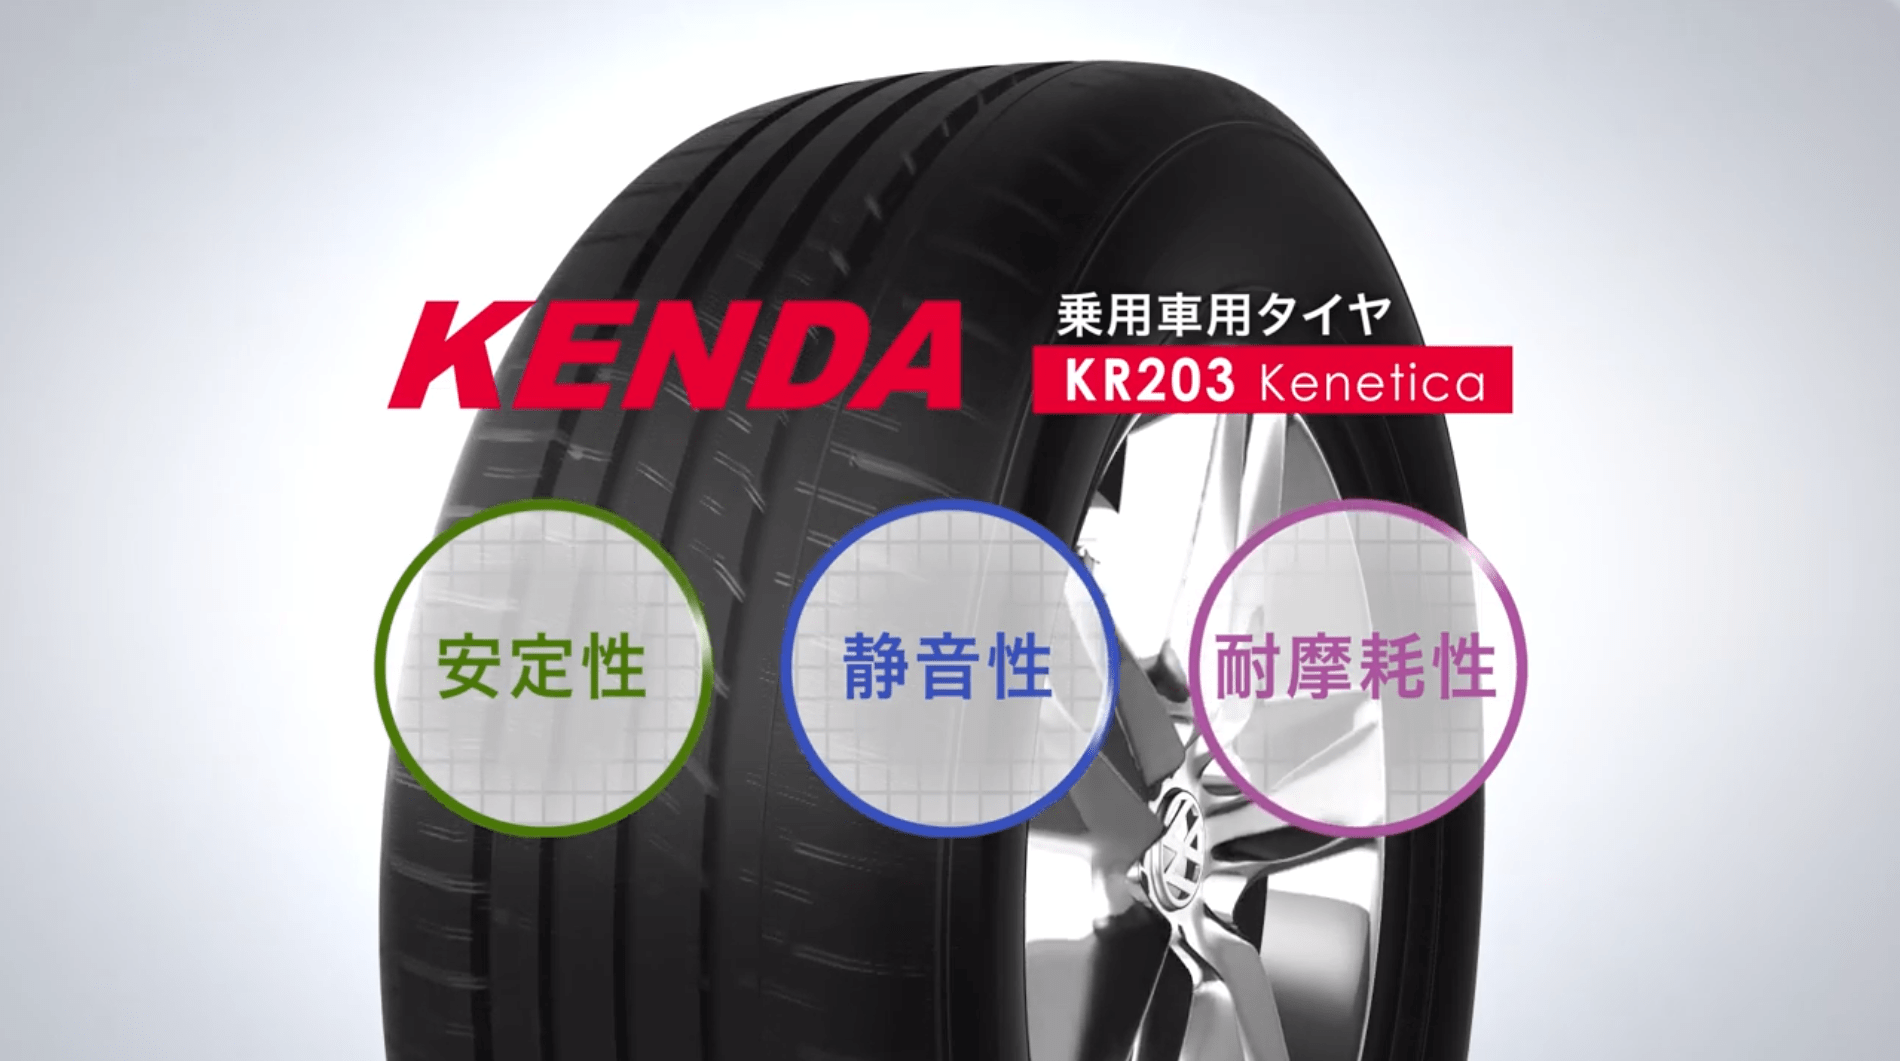 KENDA 乗用車用タイヤ KR203 Kenetica のご紹介